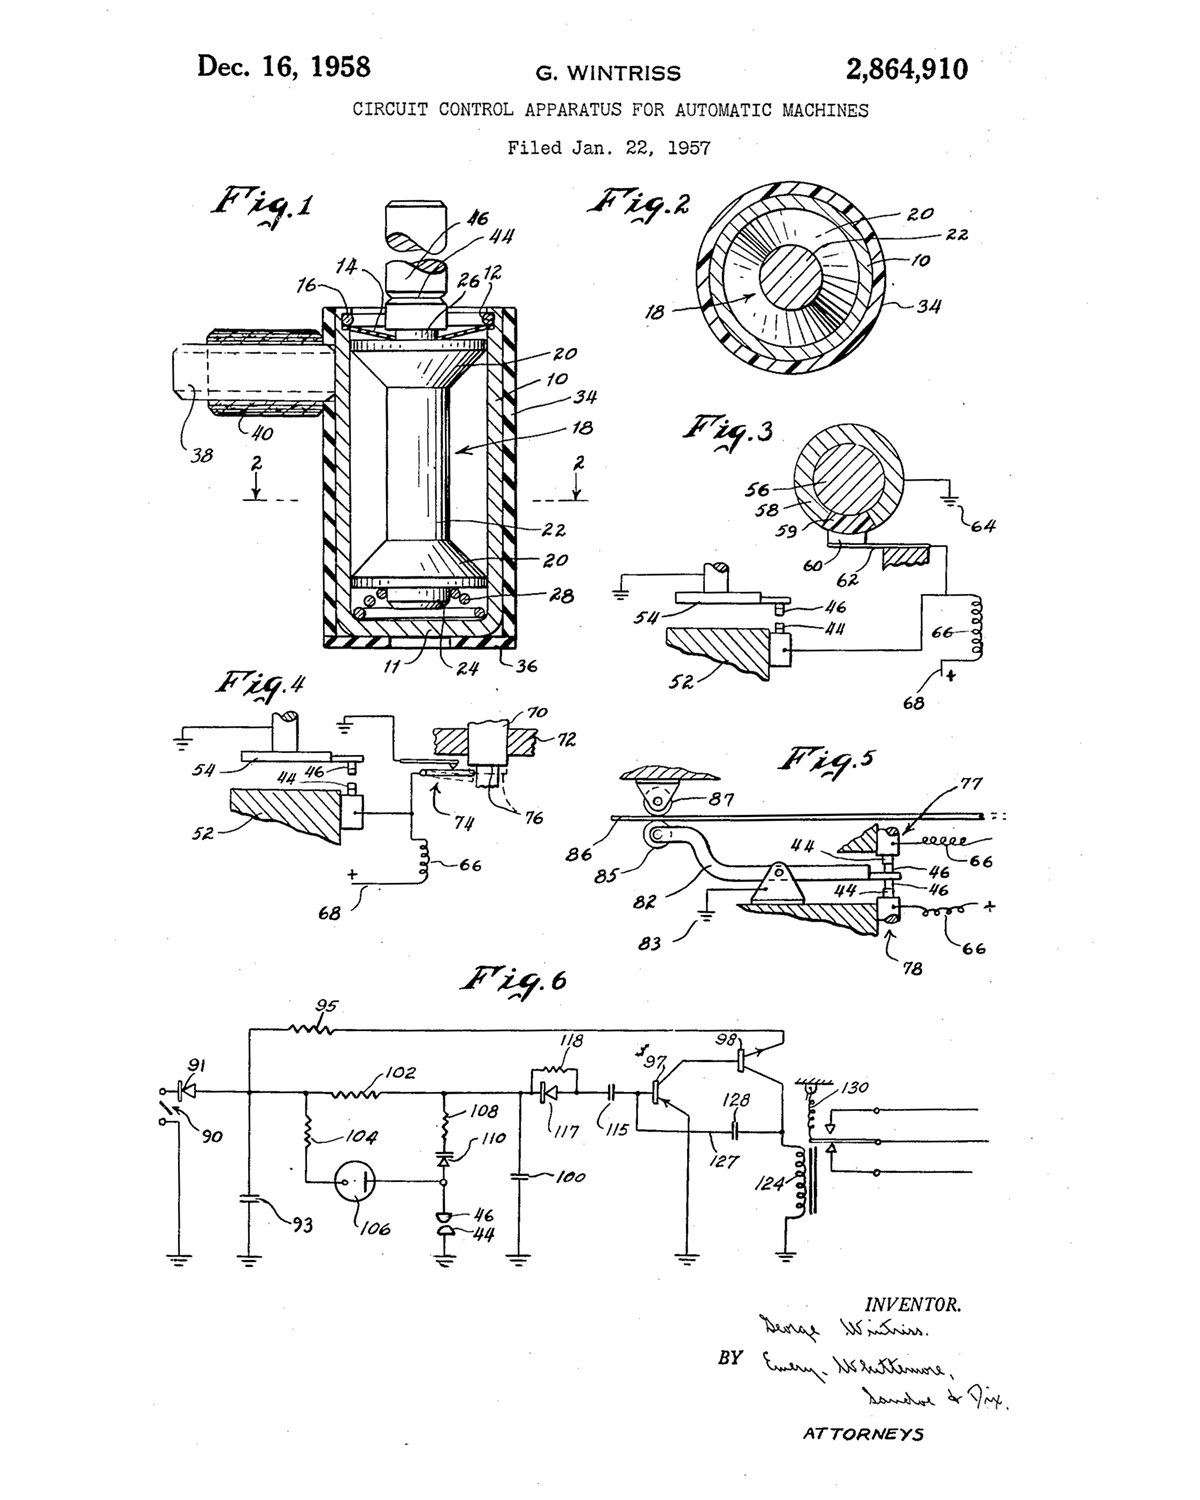 Wintriss's 1958 Patent